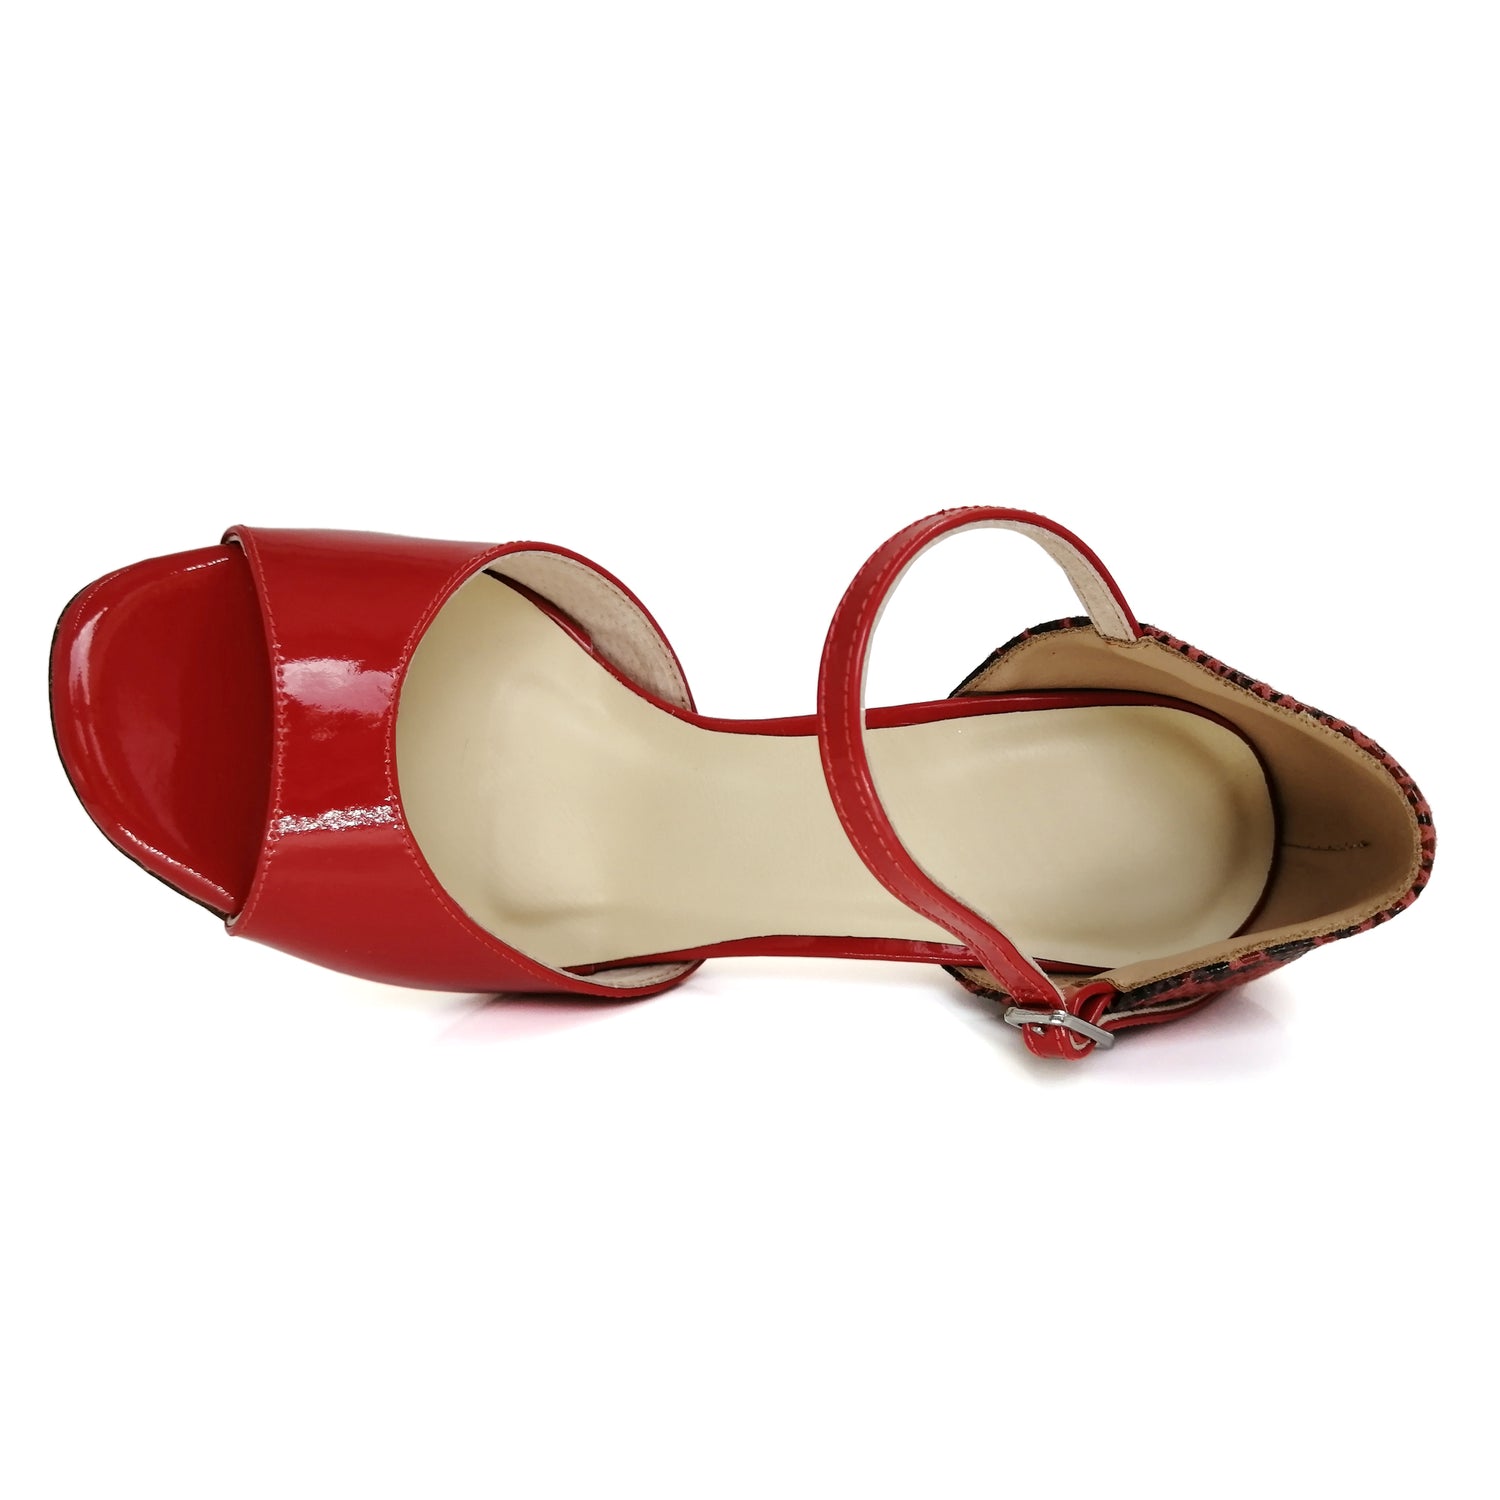 Pro Dancer red leather high heels Argentine Tango dance sandals6